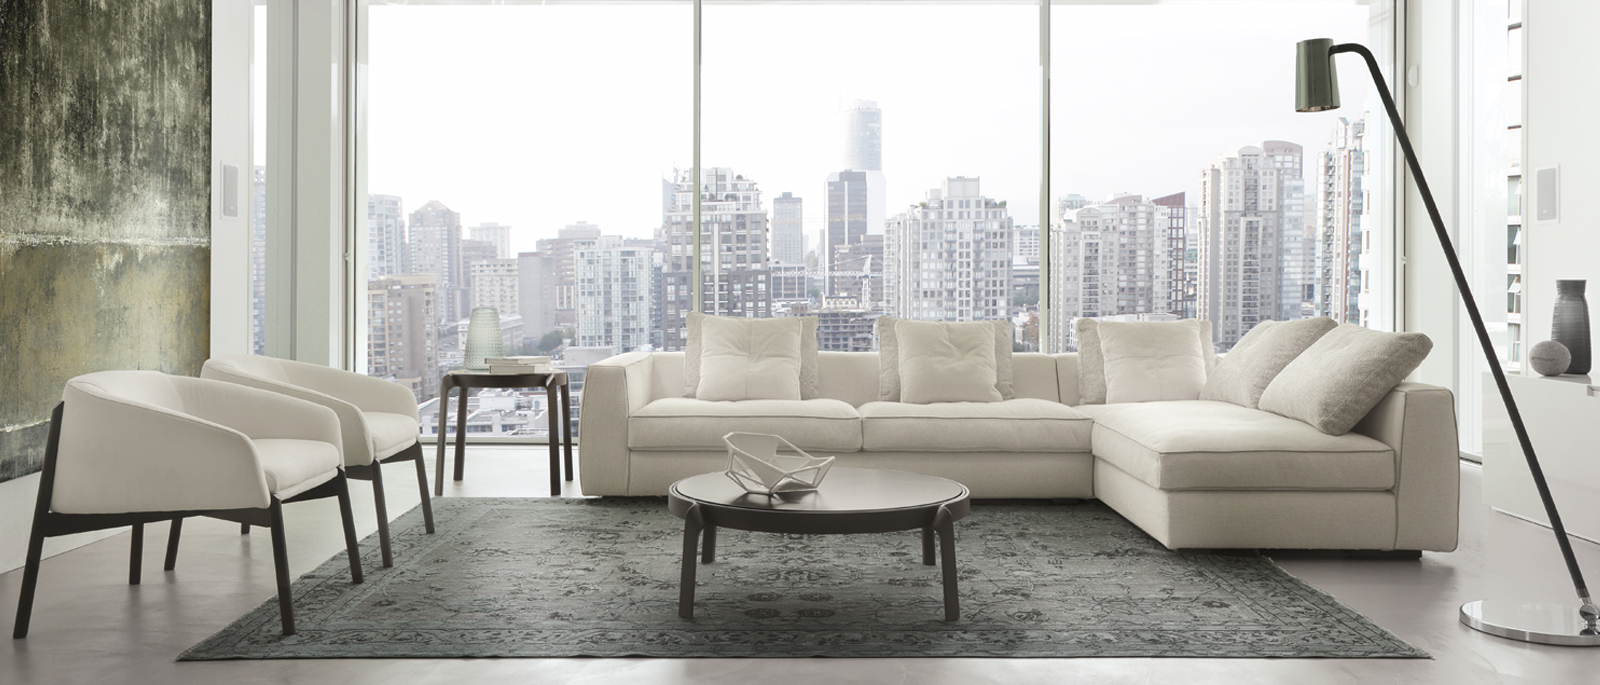 clay luxury handmade sofa in modern living room